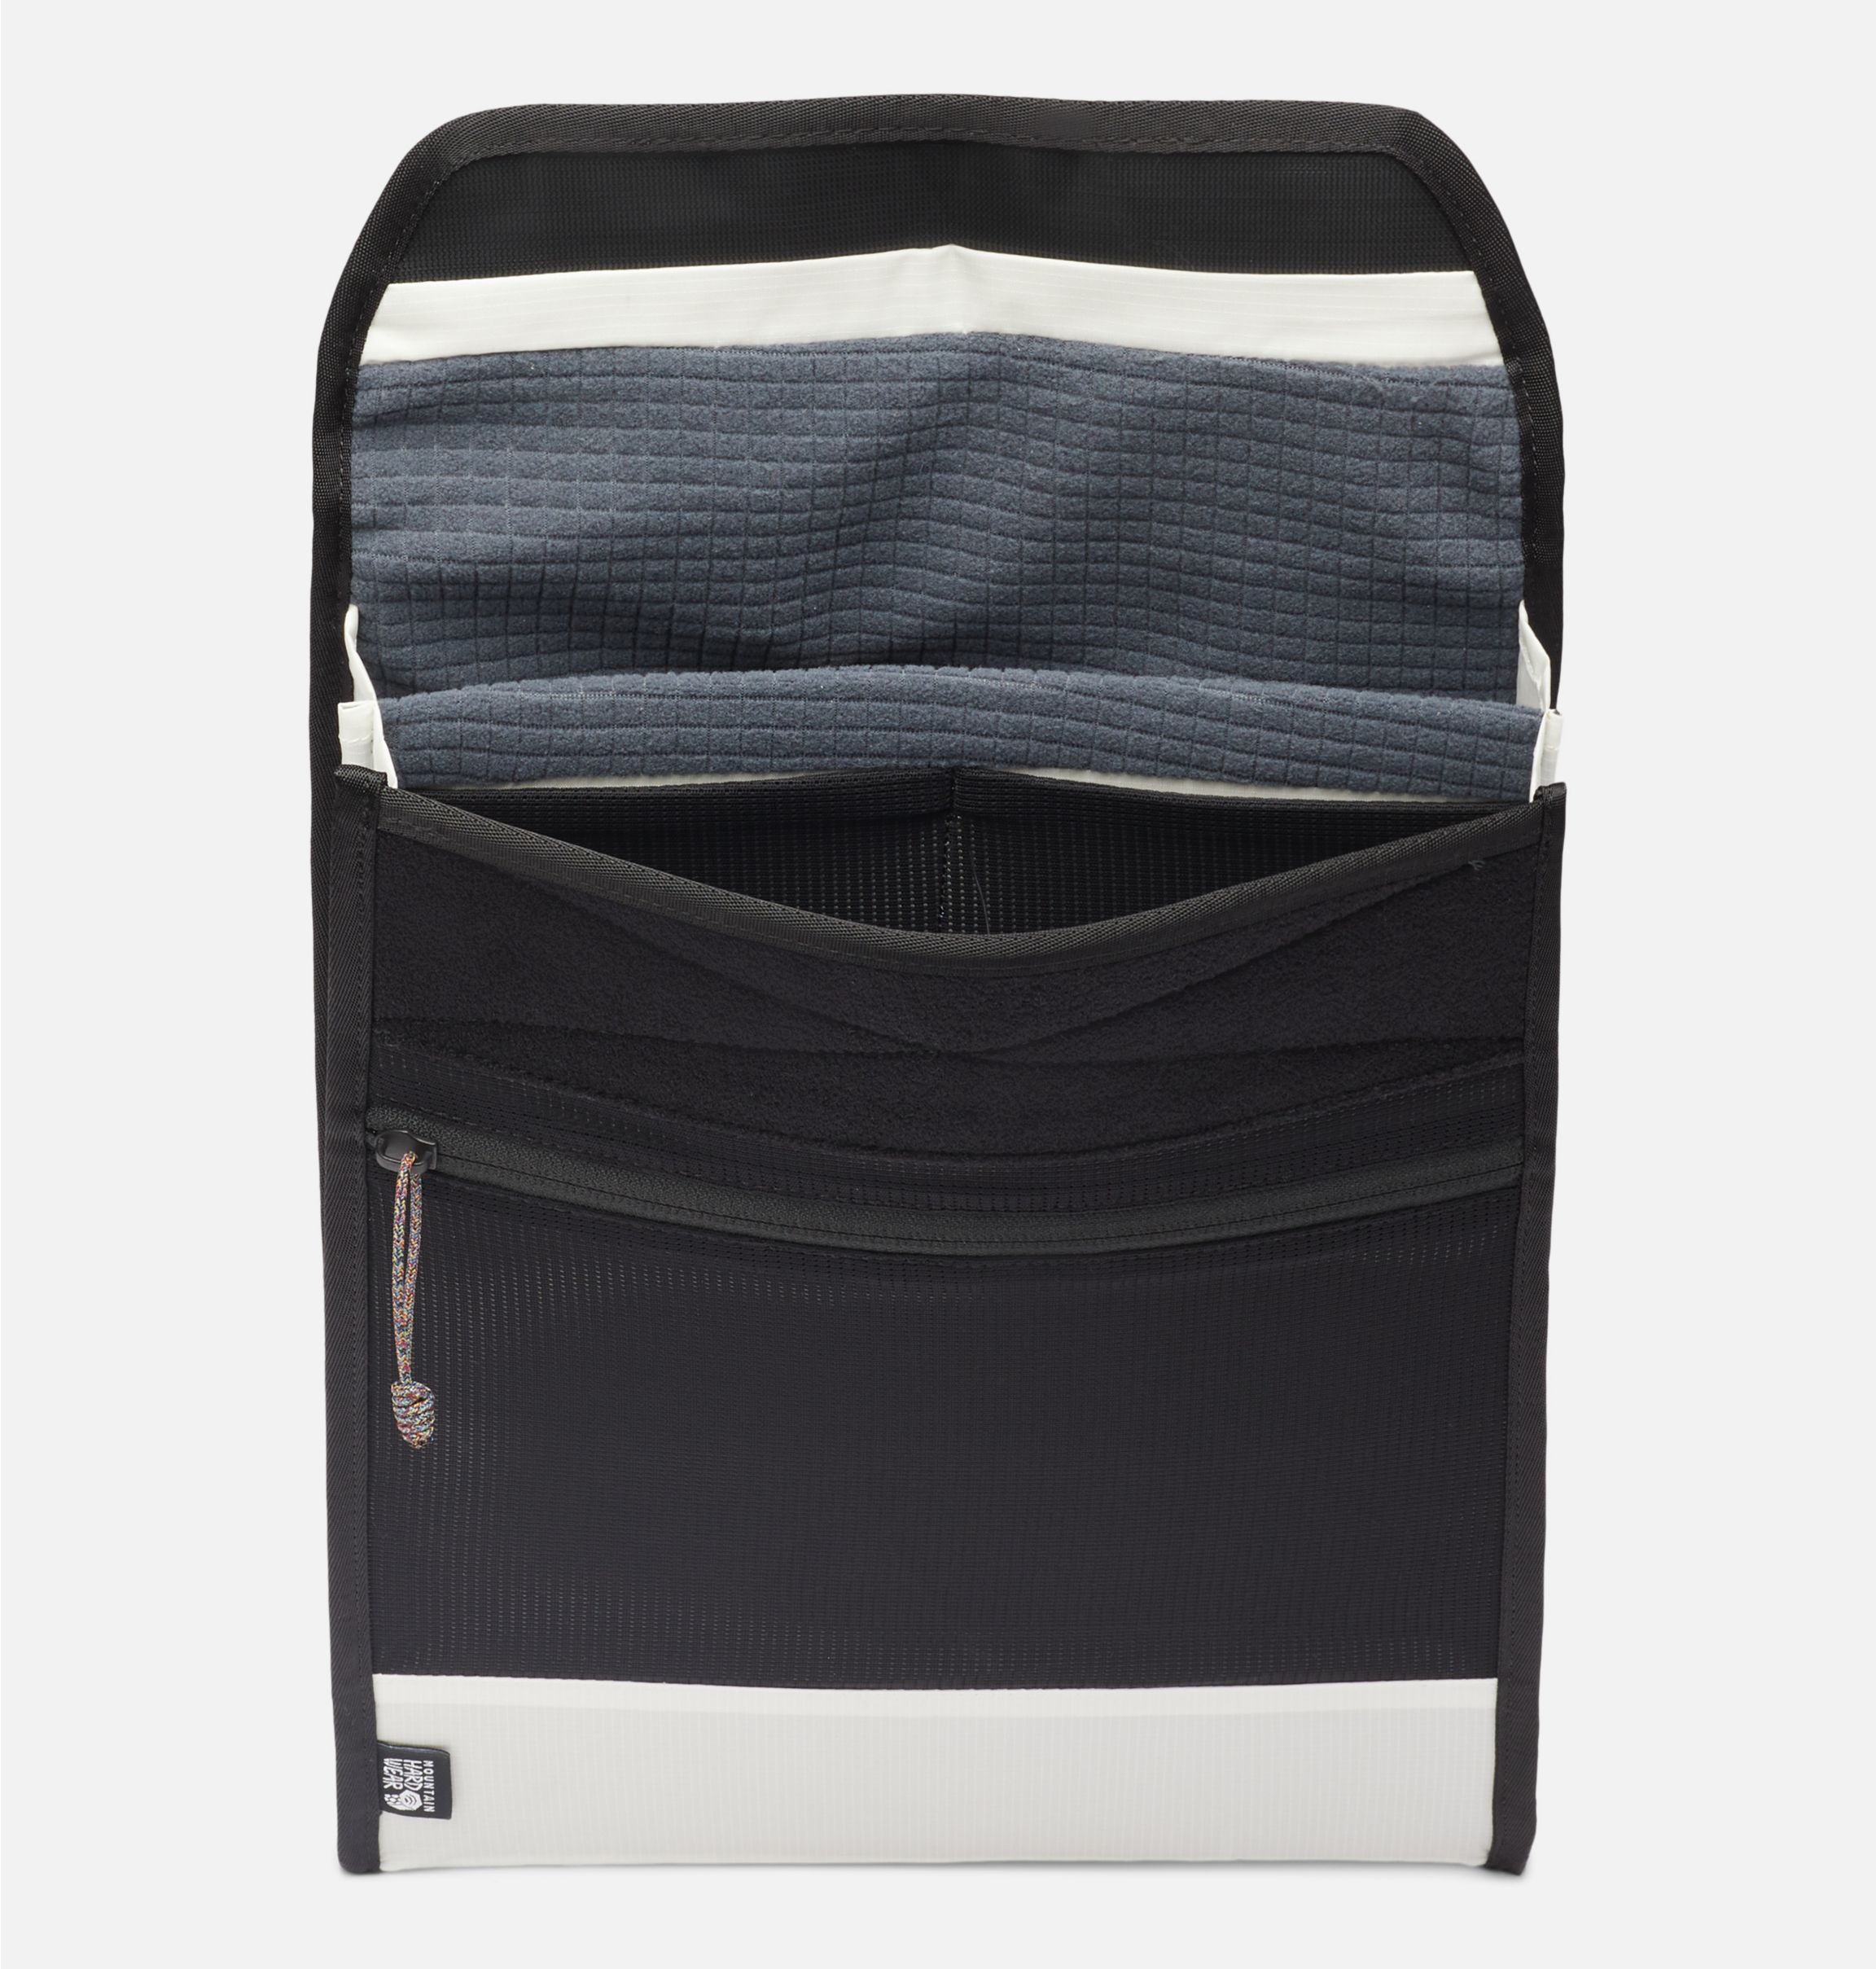 Simcoe 28 Backpack | Mountain Hardwear